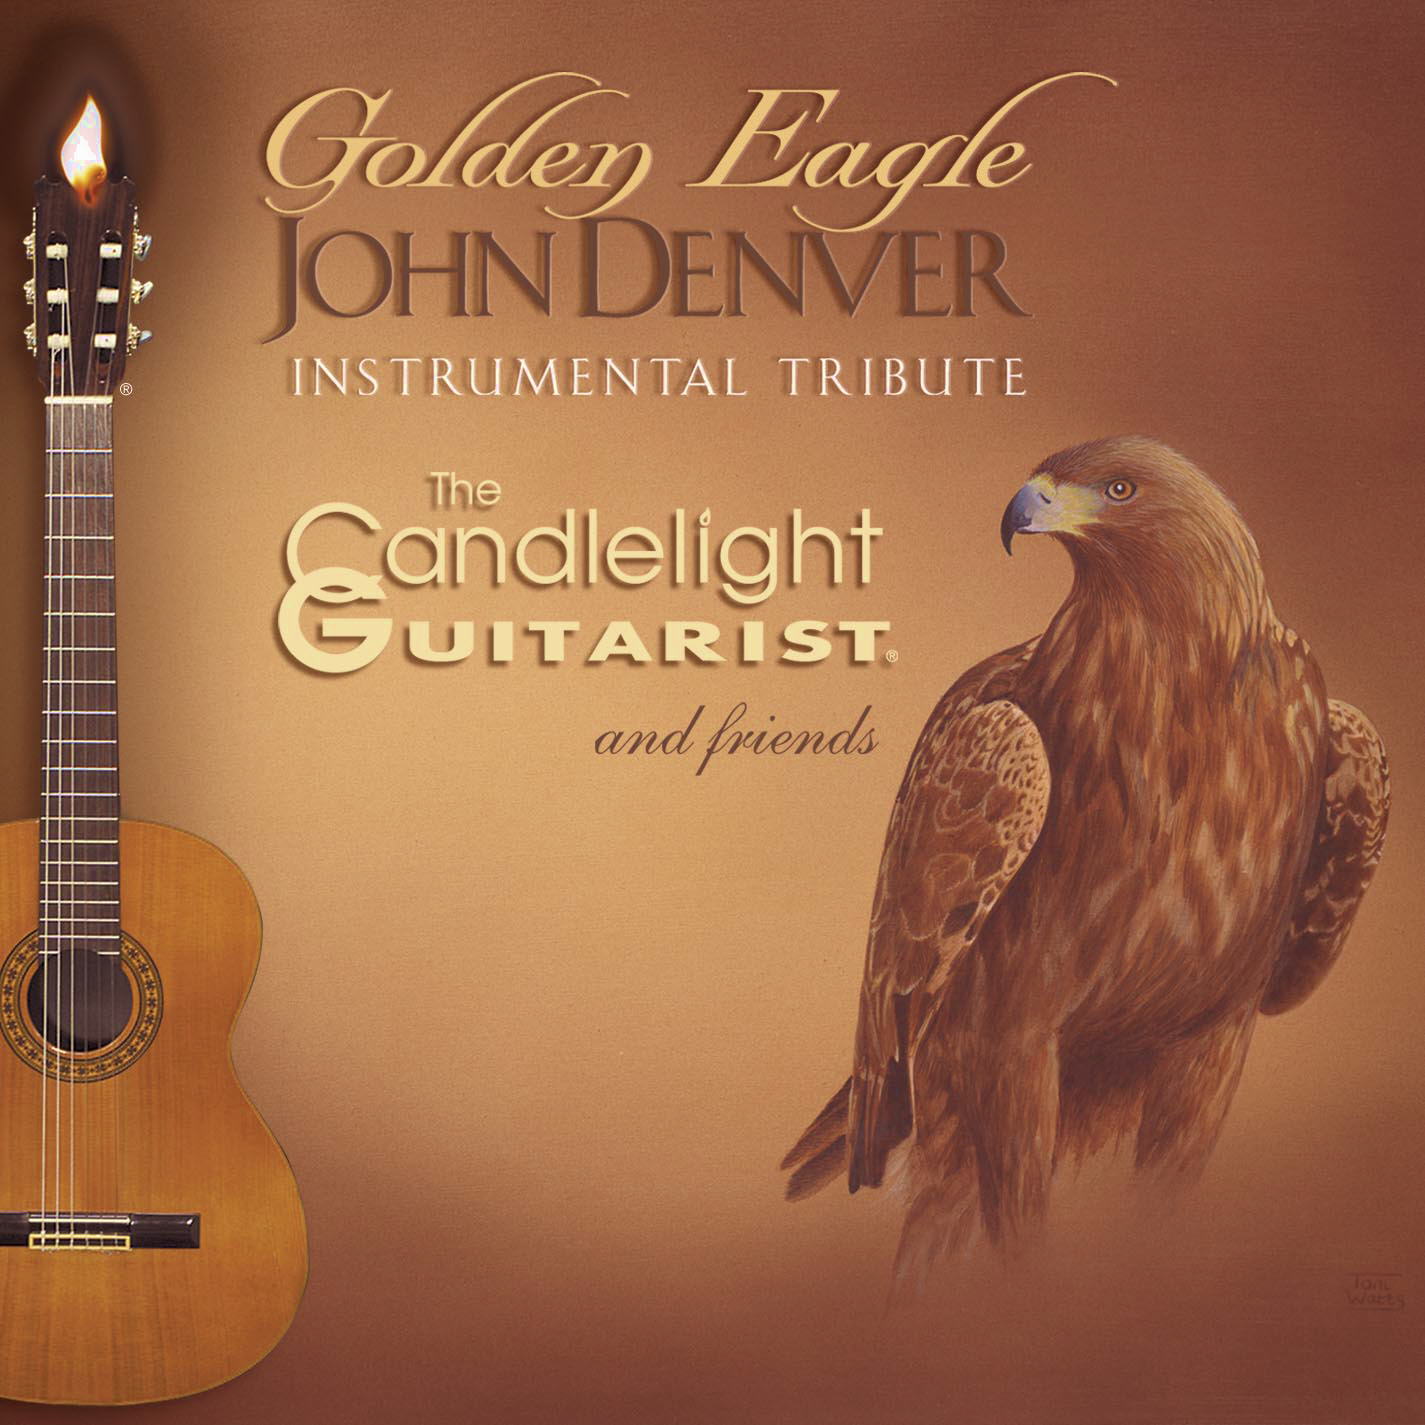 Golden Eagle: John Denver Instrumental Tribute by The Candlelight Guitarist CD cover - CLICK FOR MORE CD INFORMATION